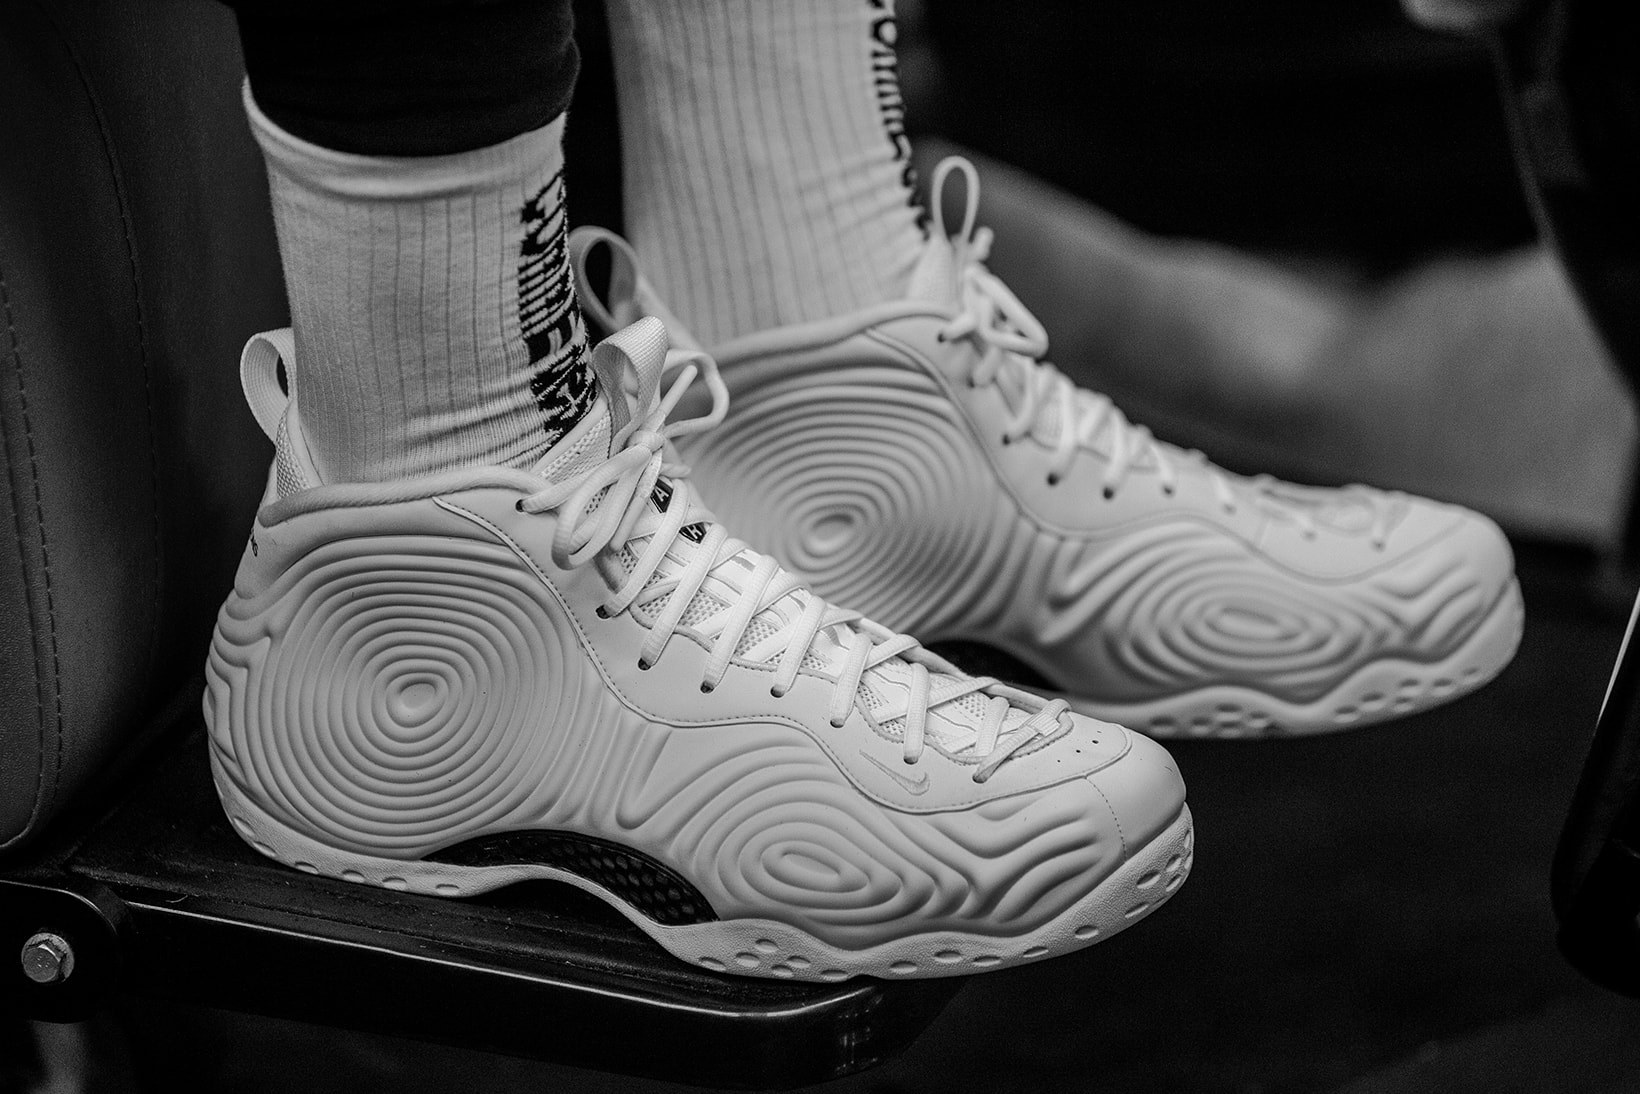 COMME des GARÇONS Nike Air Foamposite One Collaboration White Black Sneakers Footwear Kicks Shoes